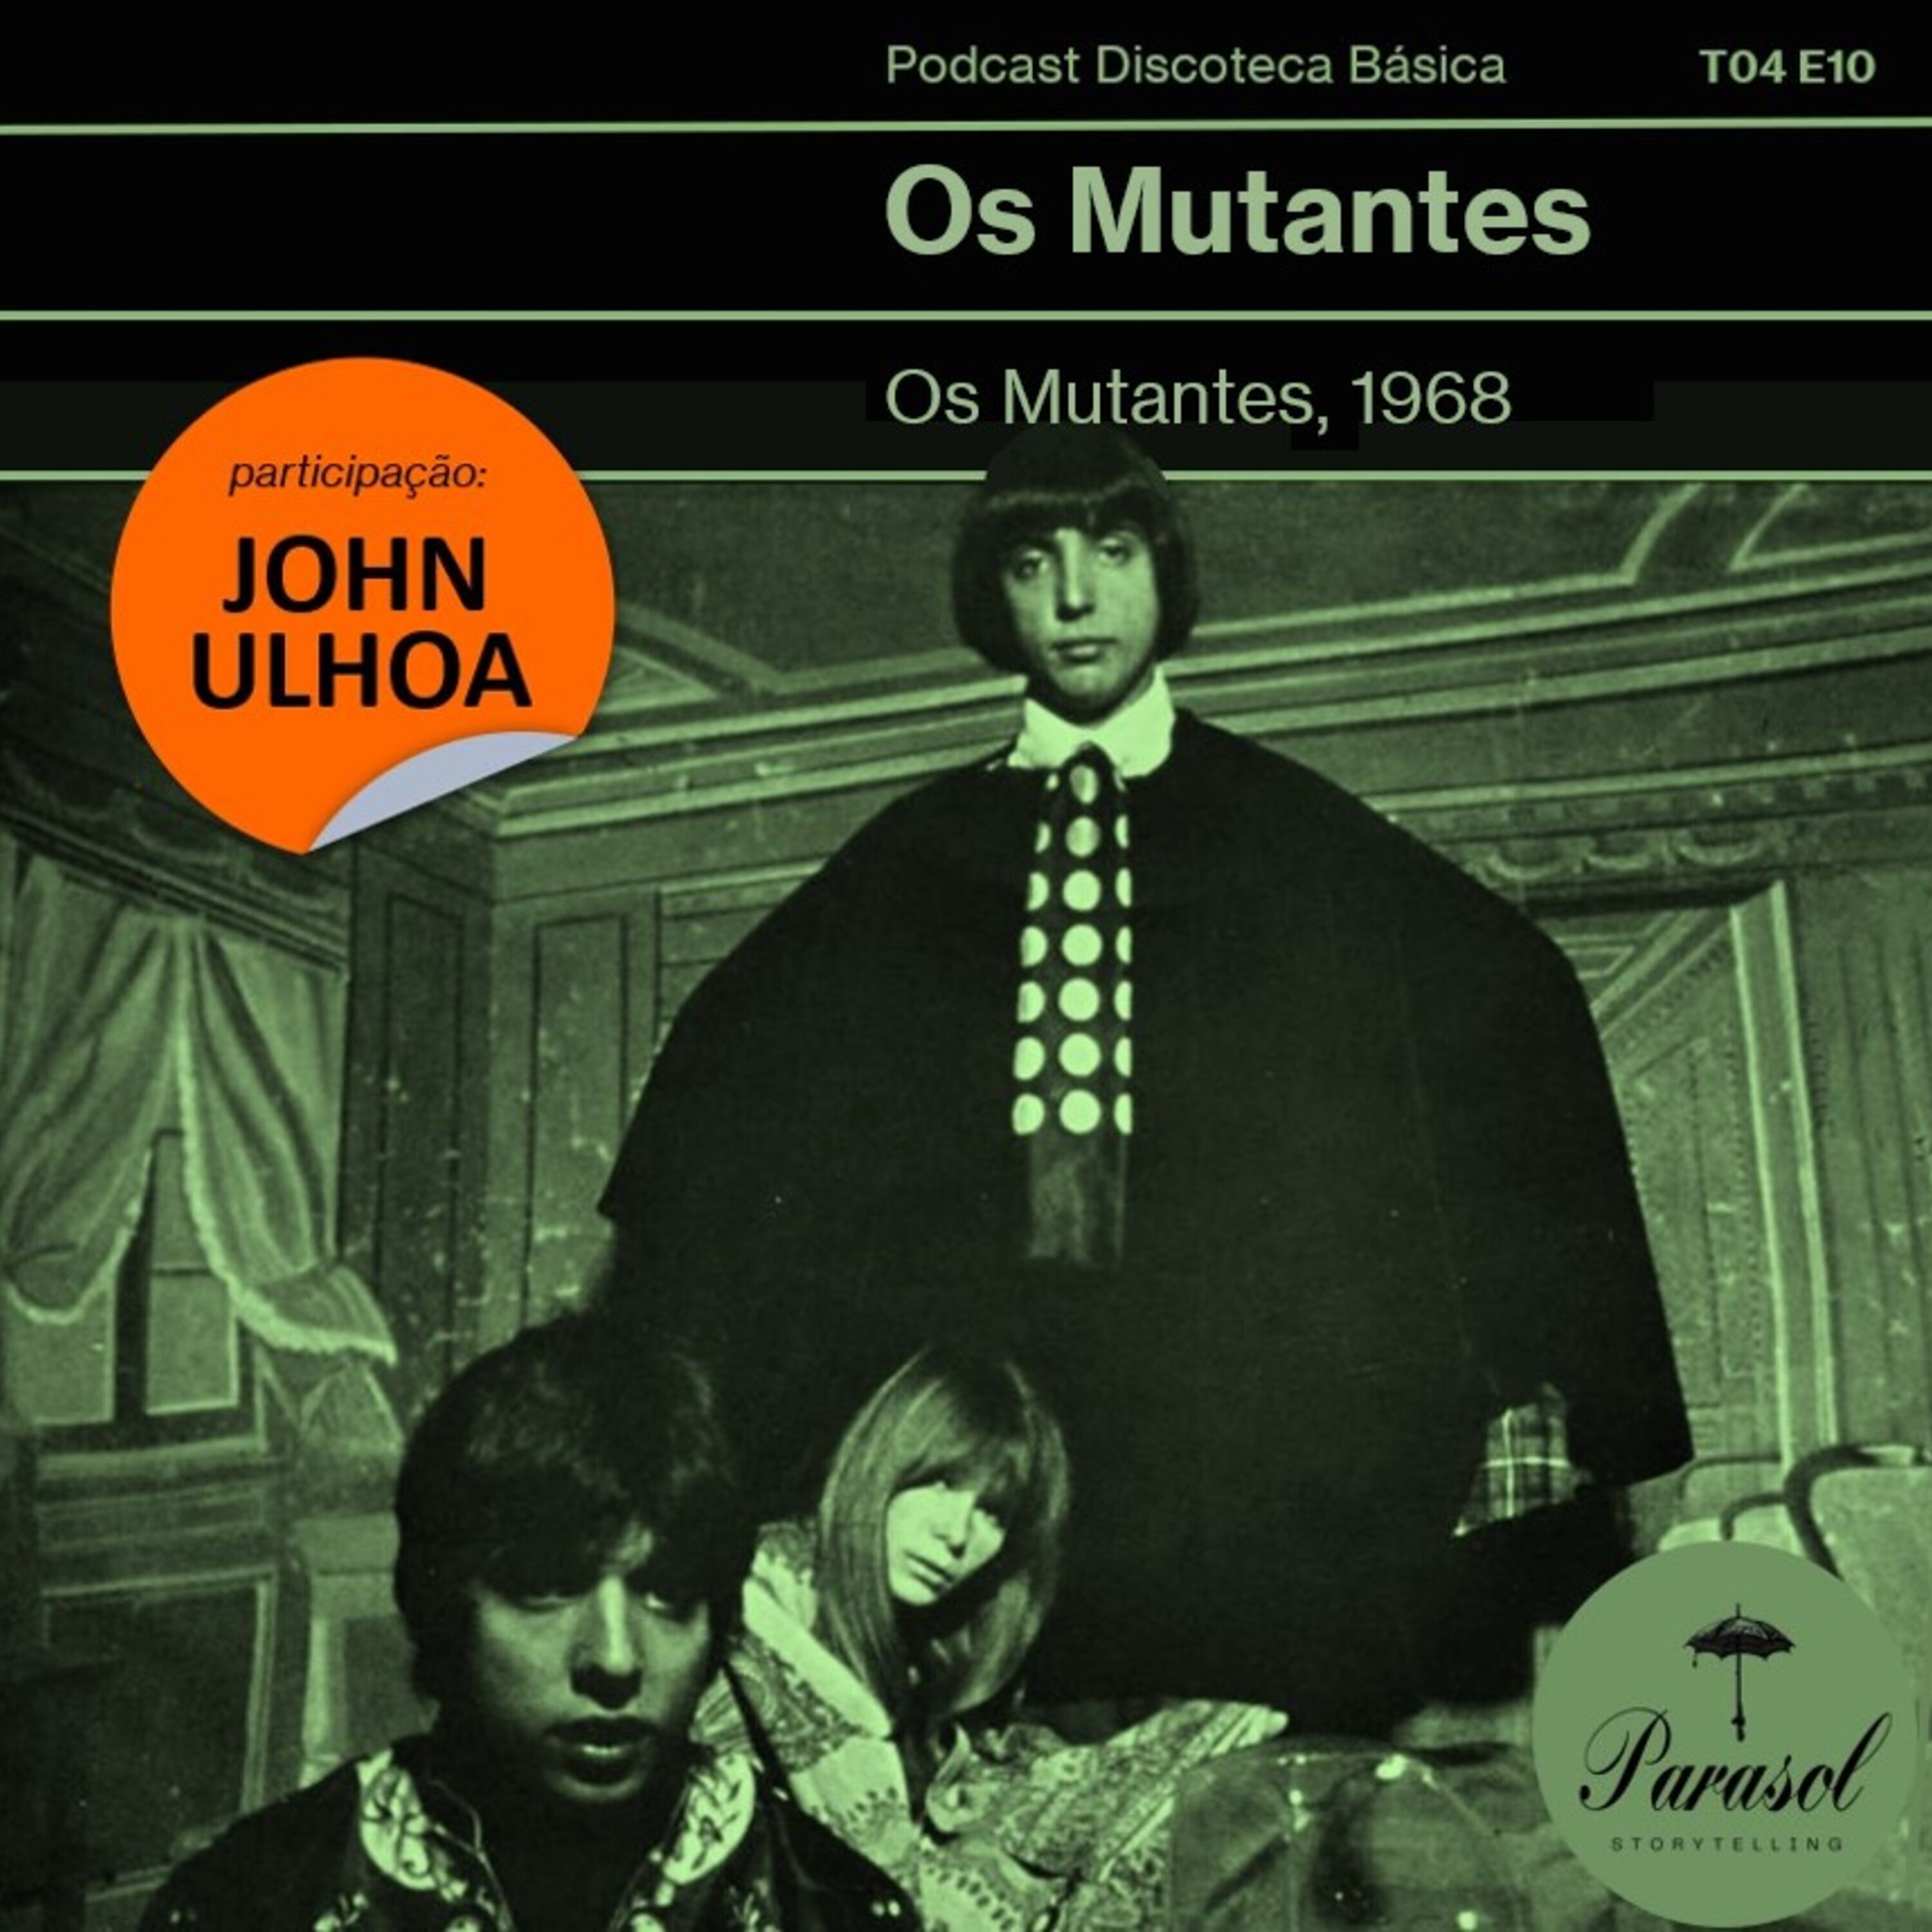 T04E10: Os Mutantes - Os Mutantes (1968)